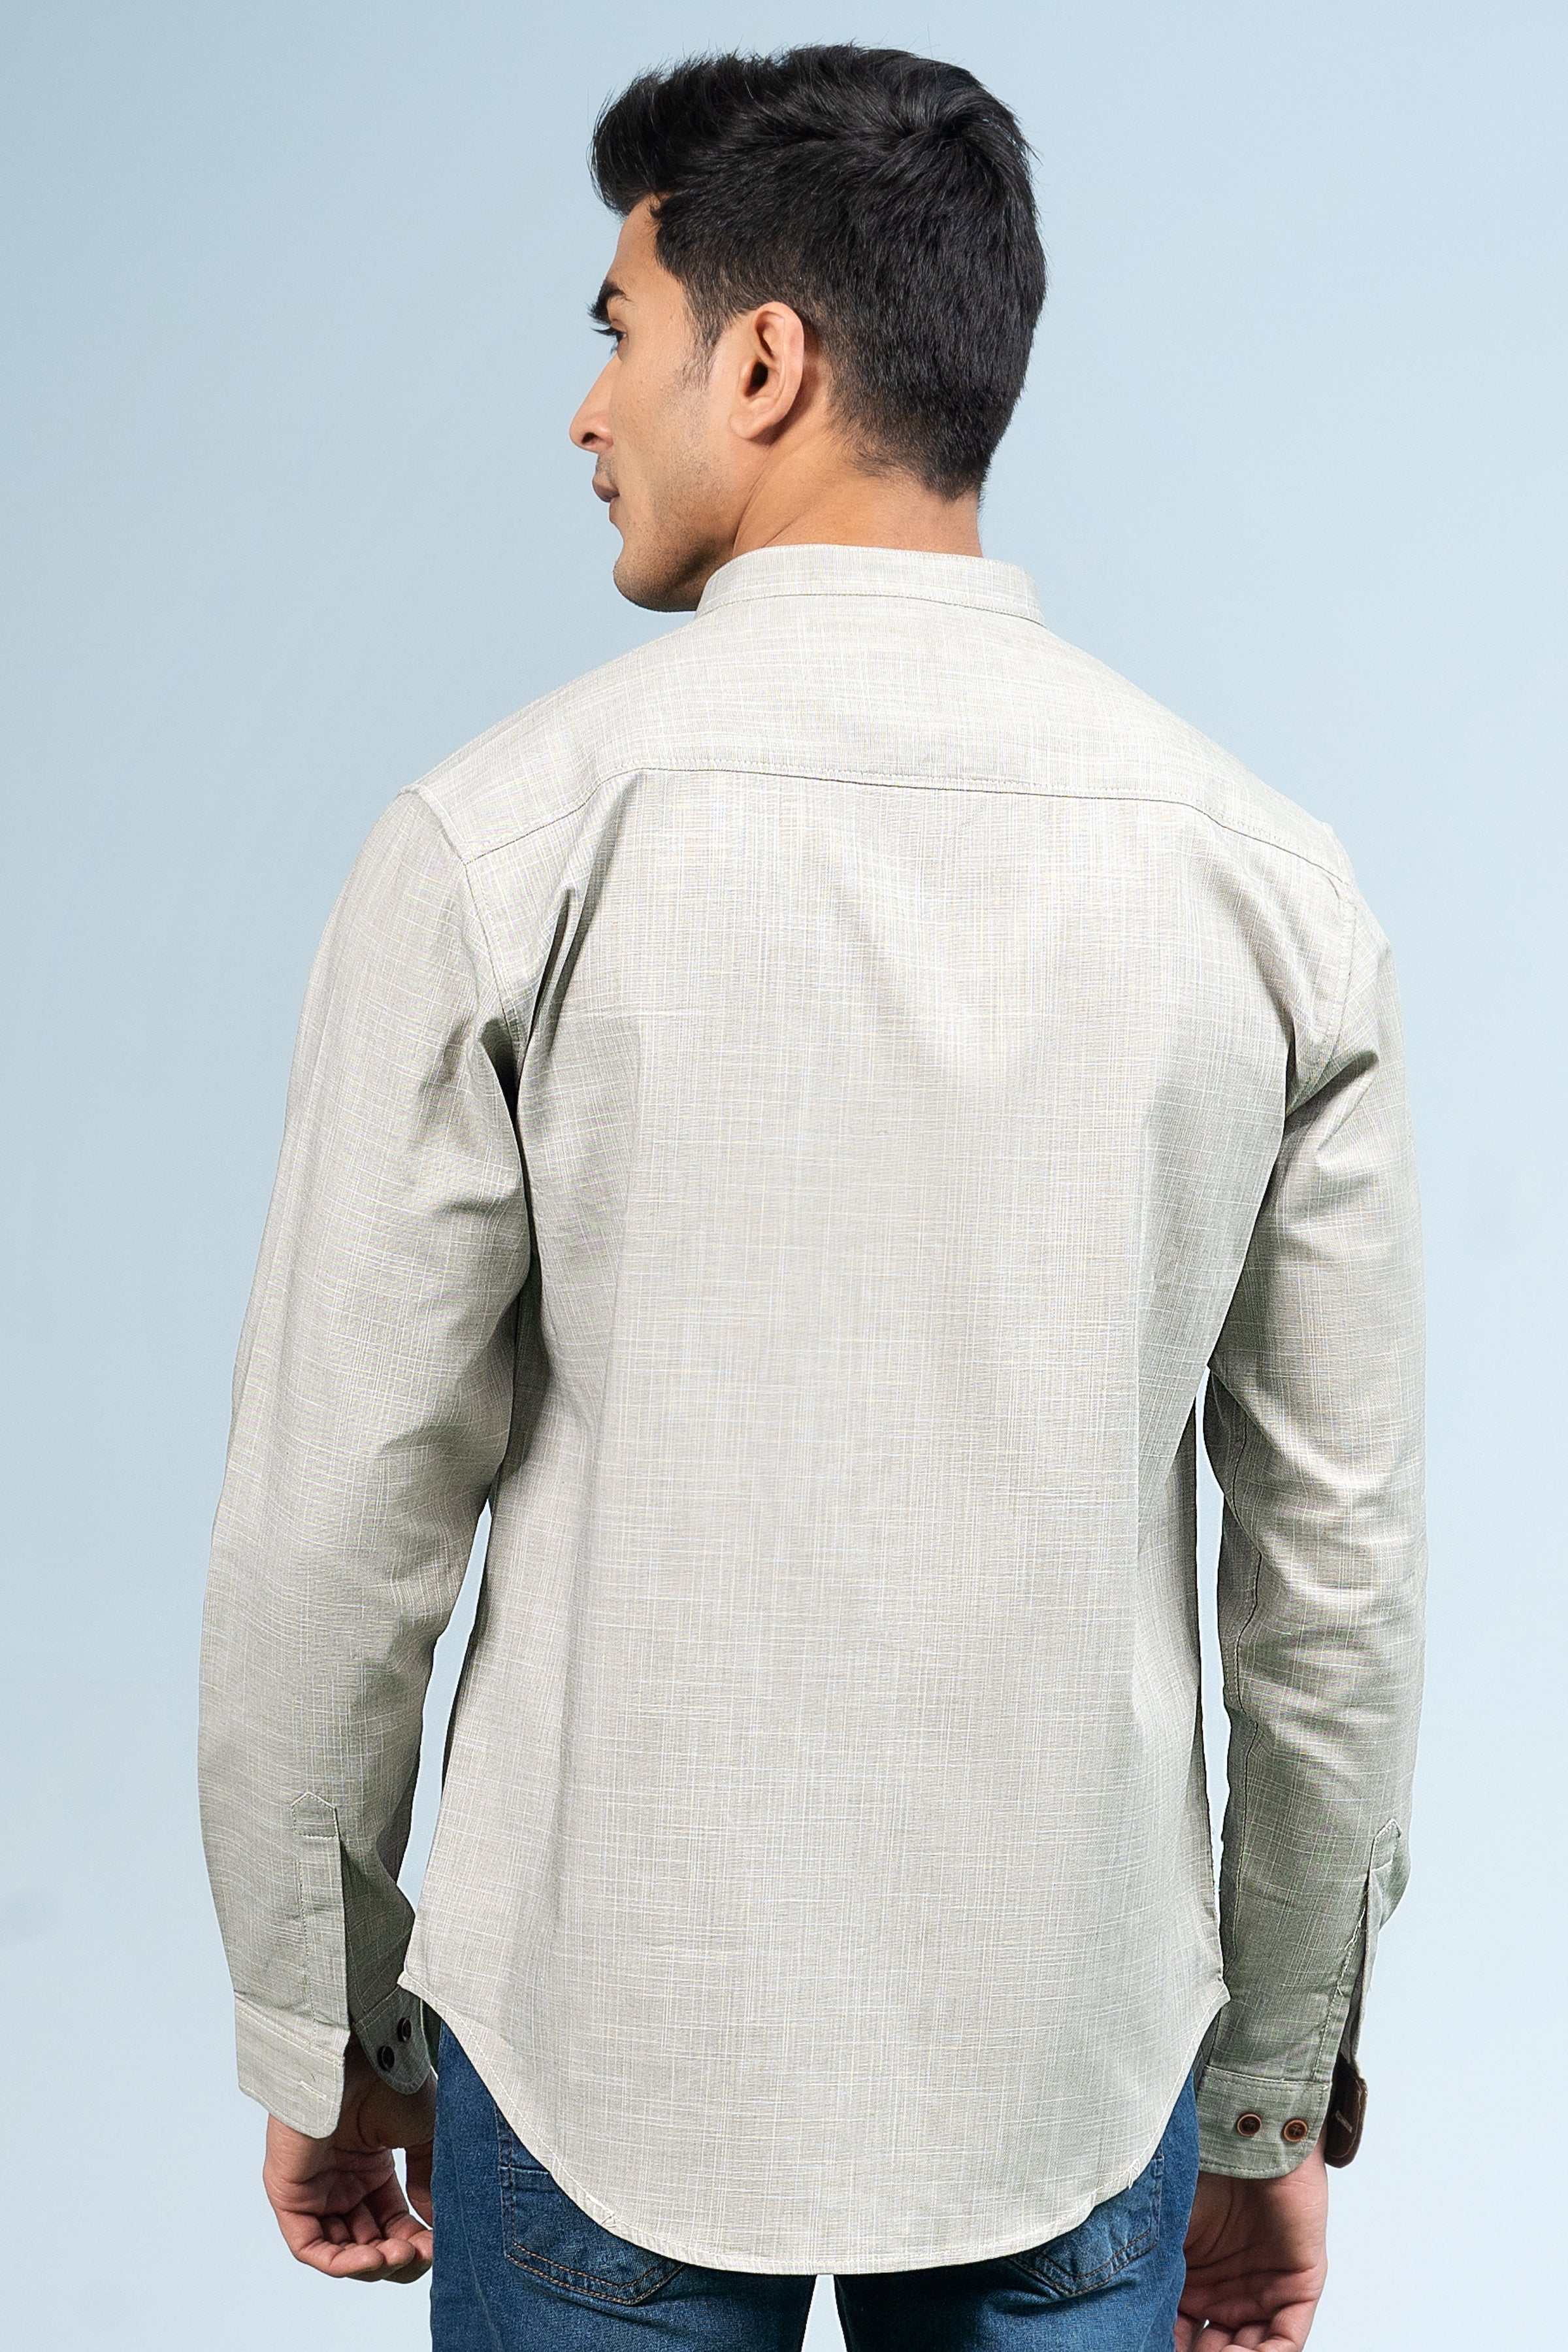 CASUAL SHIRT KHAKI - Charcoal Clothing